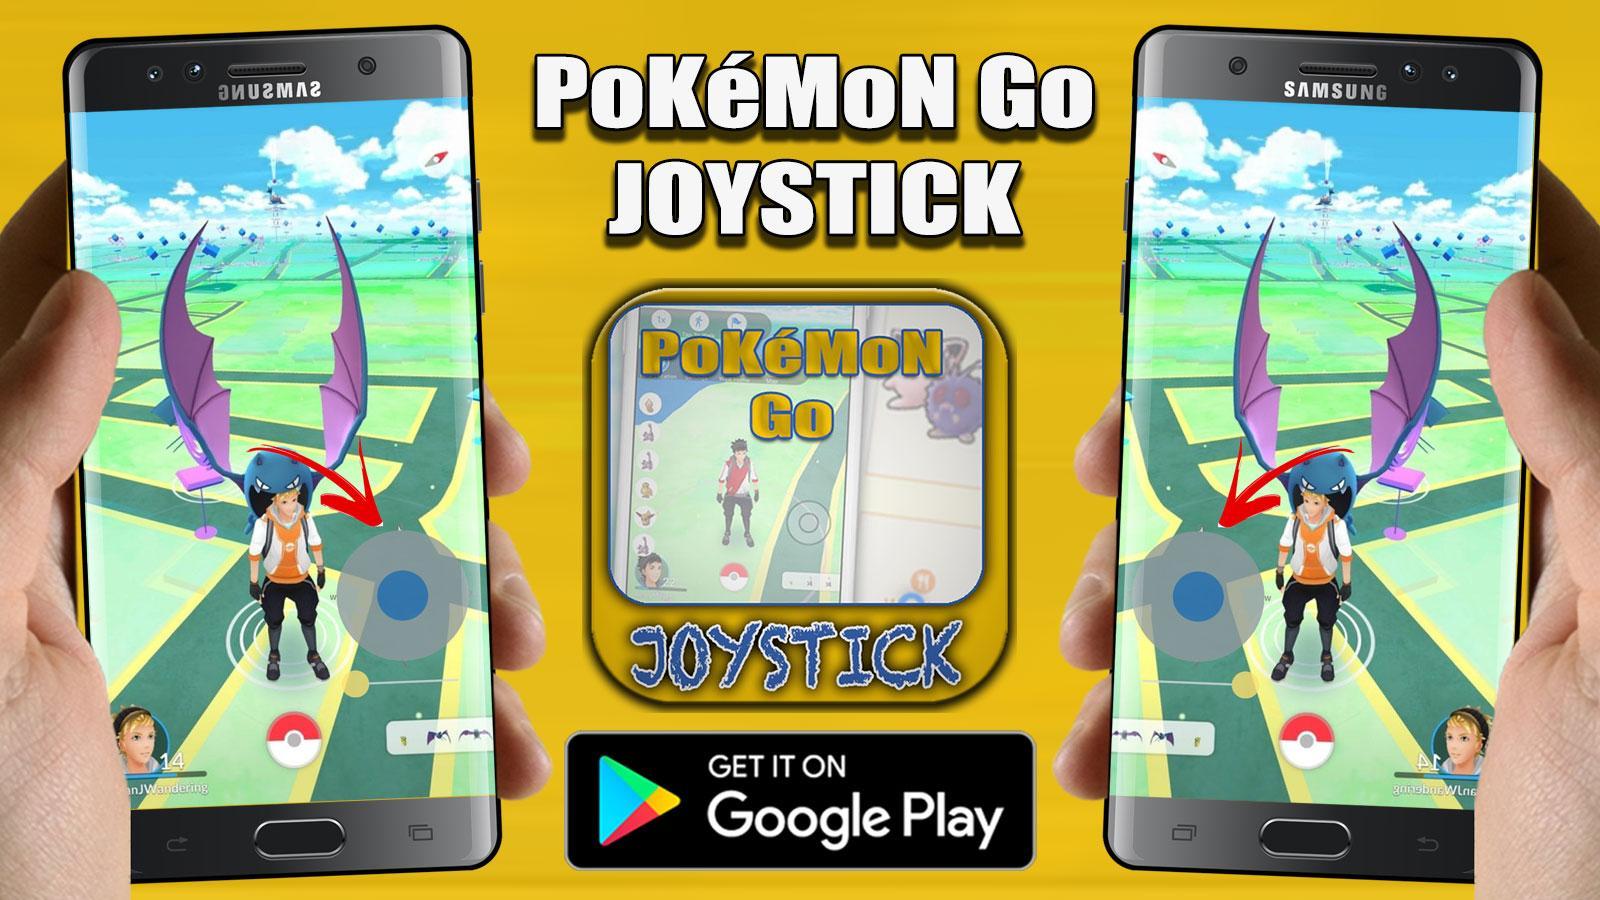 Get Joystick On Poke Go Fake GPS New Prank for Android - APK Download